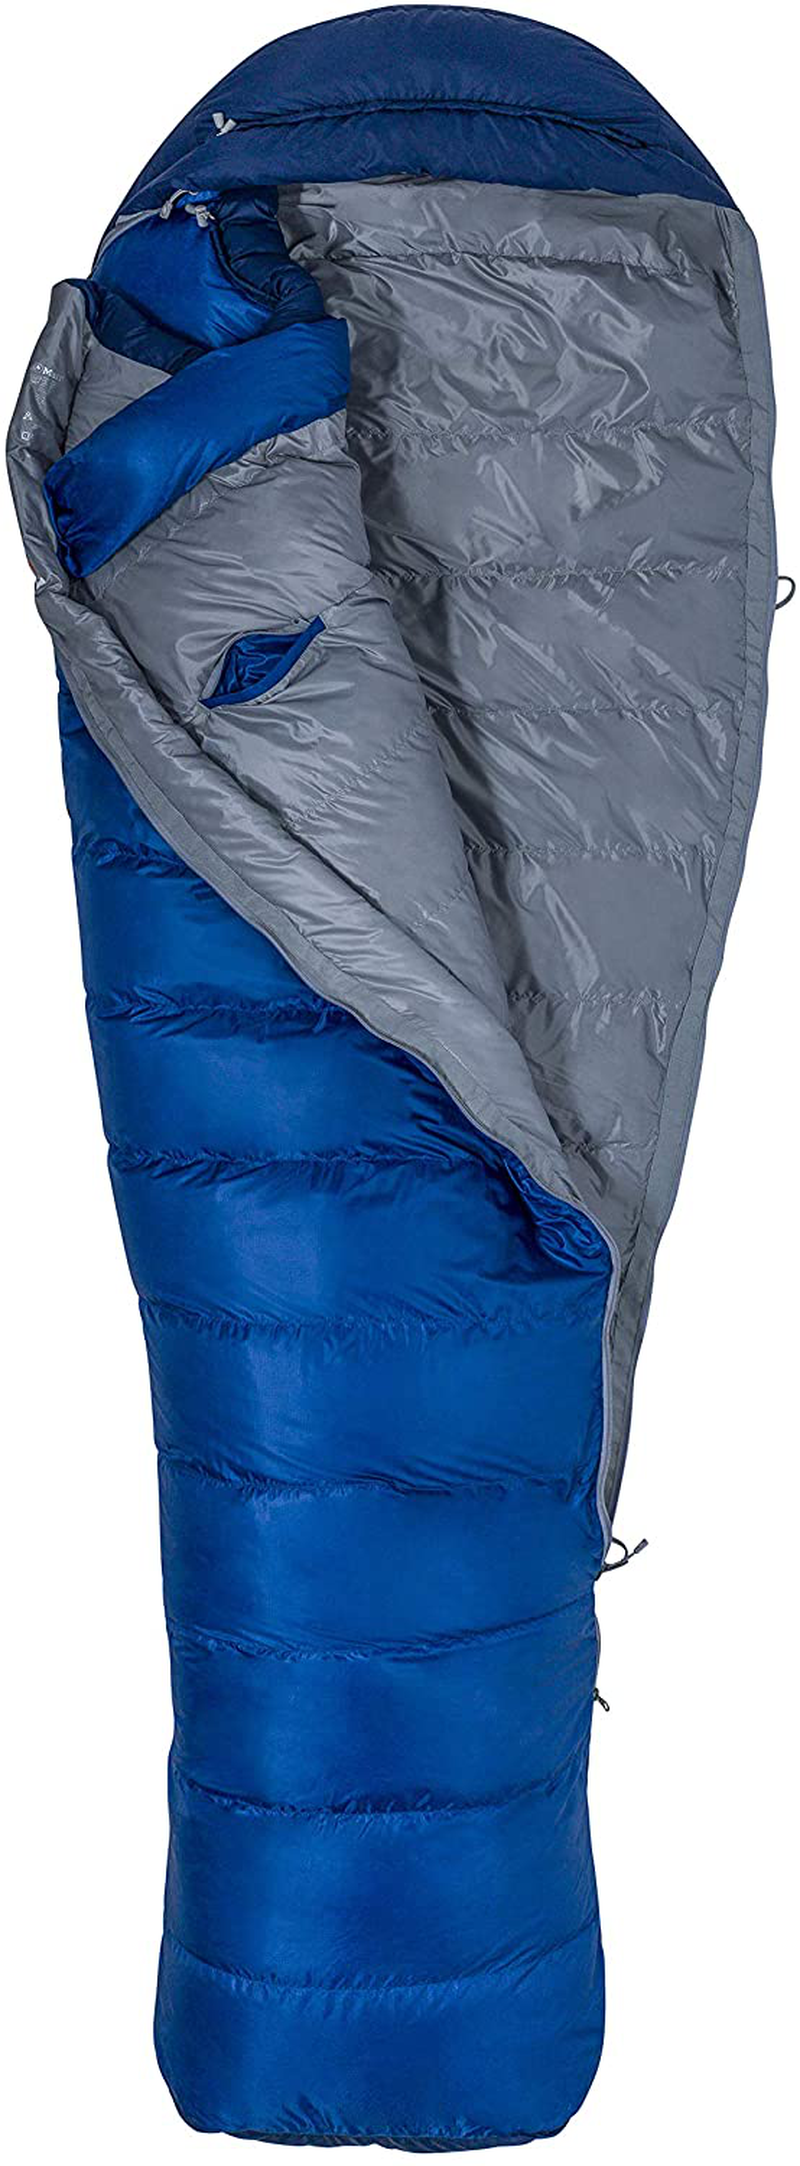 Marmot Sawtooth Sleeping Bag: 15 Degree down Surf/Arctic Navy, Reg/Right Zip